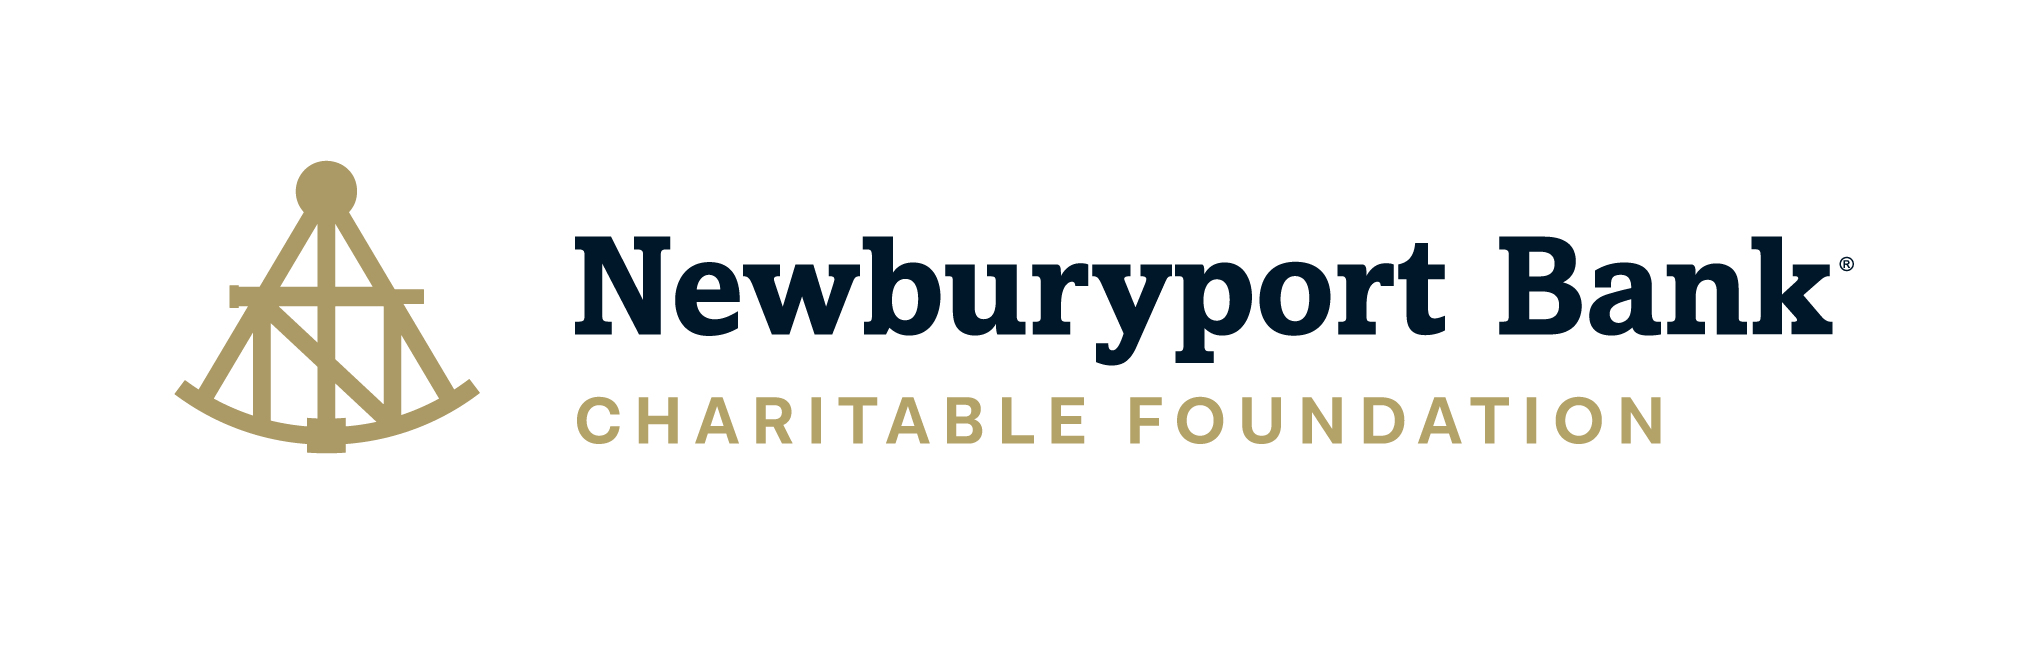 Newburyport Bank Charitable Foundation logo